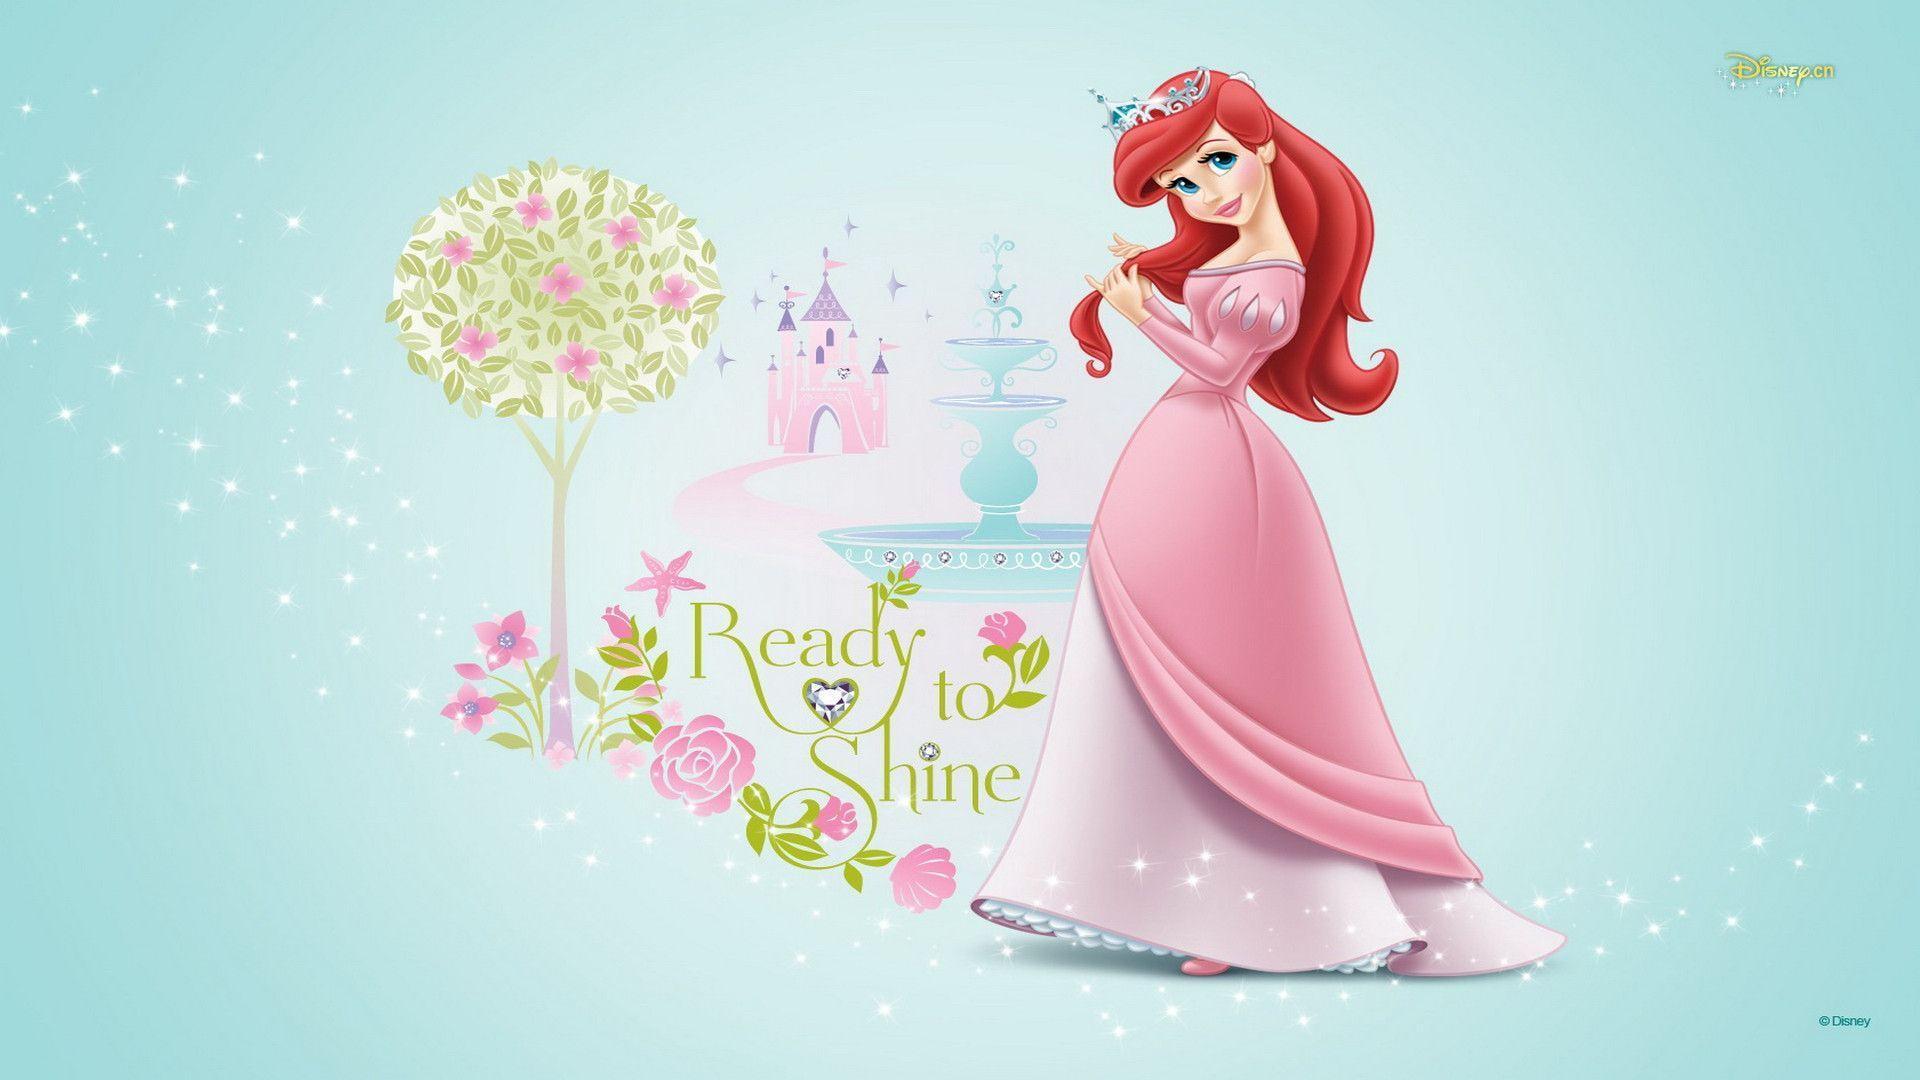 Beautiful Disney Princess Ariel Wallpaper. Foolhardi